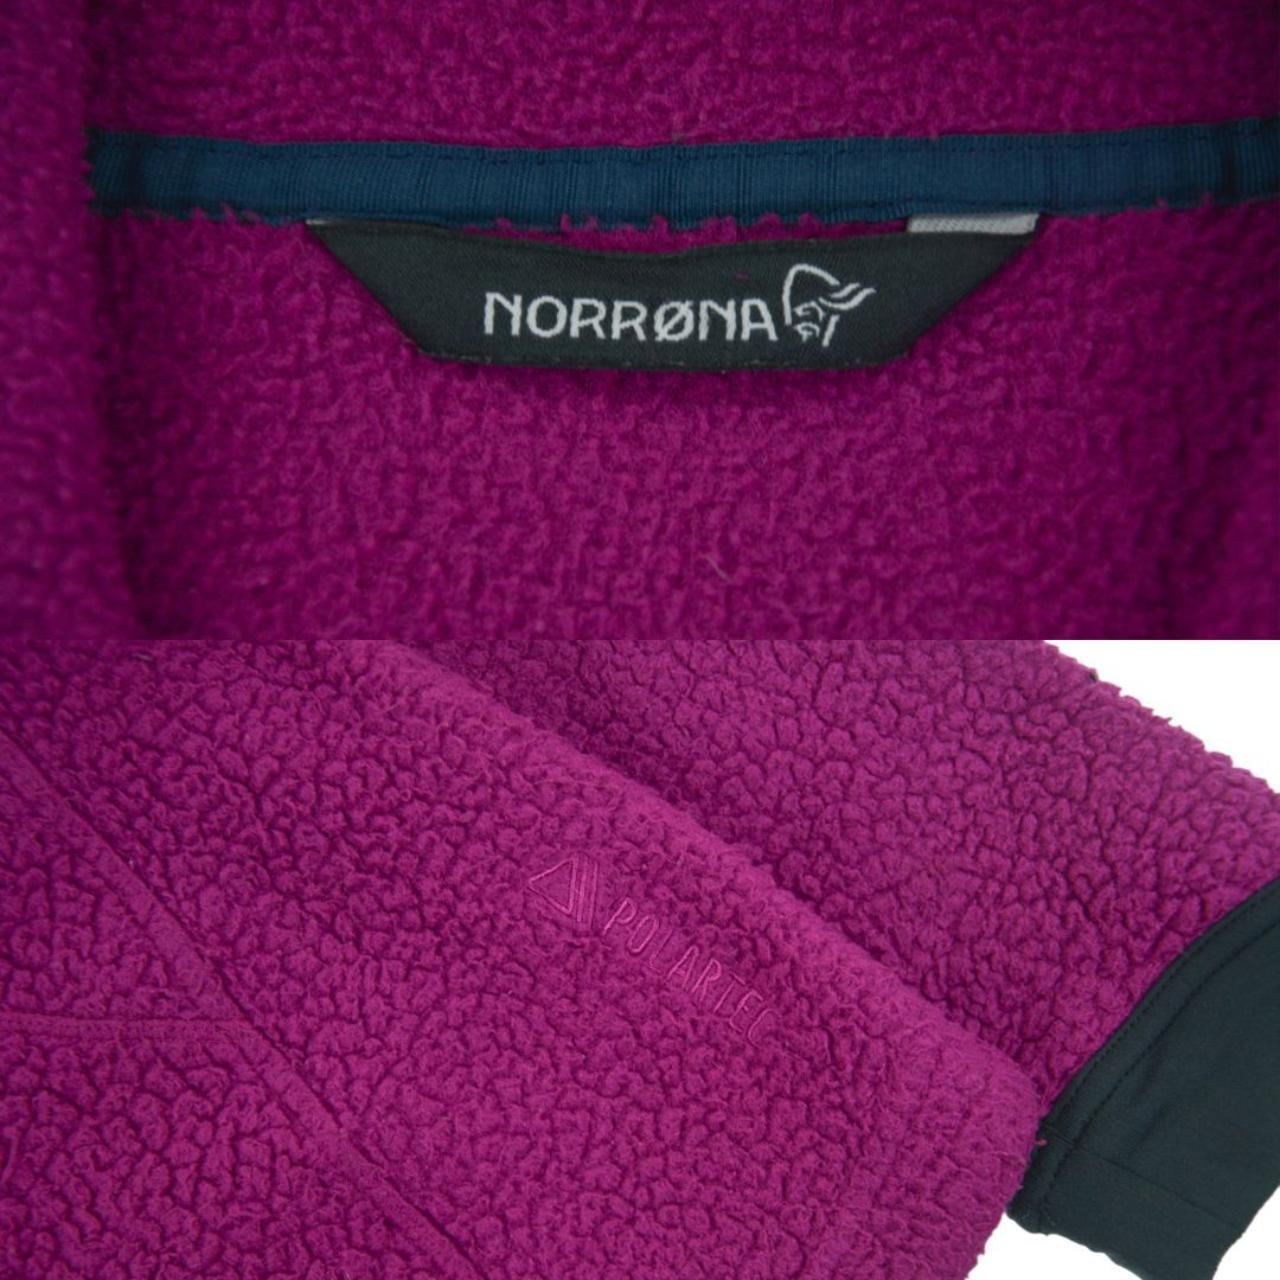 Vintage Norrona Fleece Zip Up Women's Size XL - Known Source